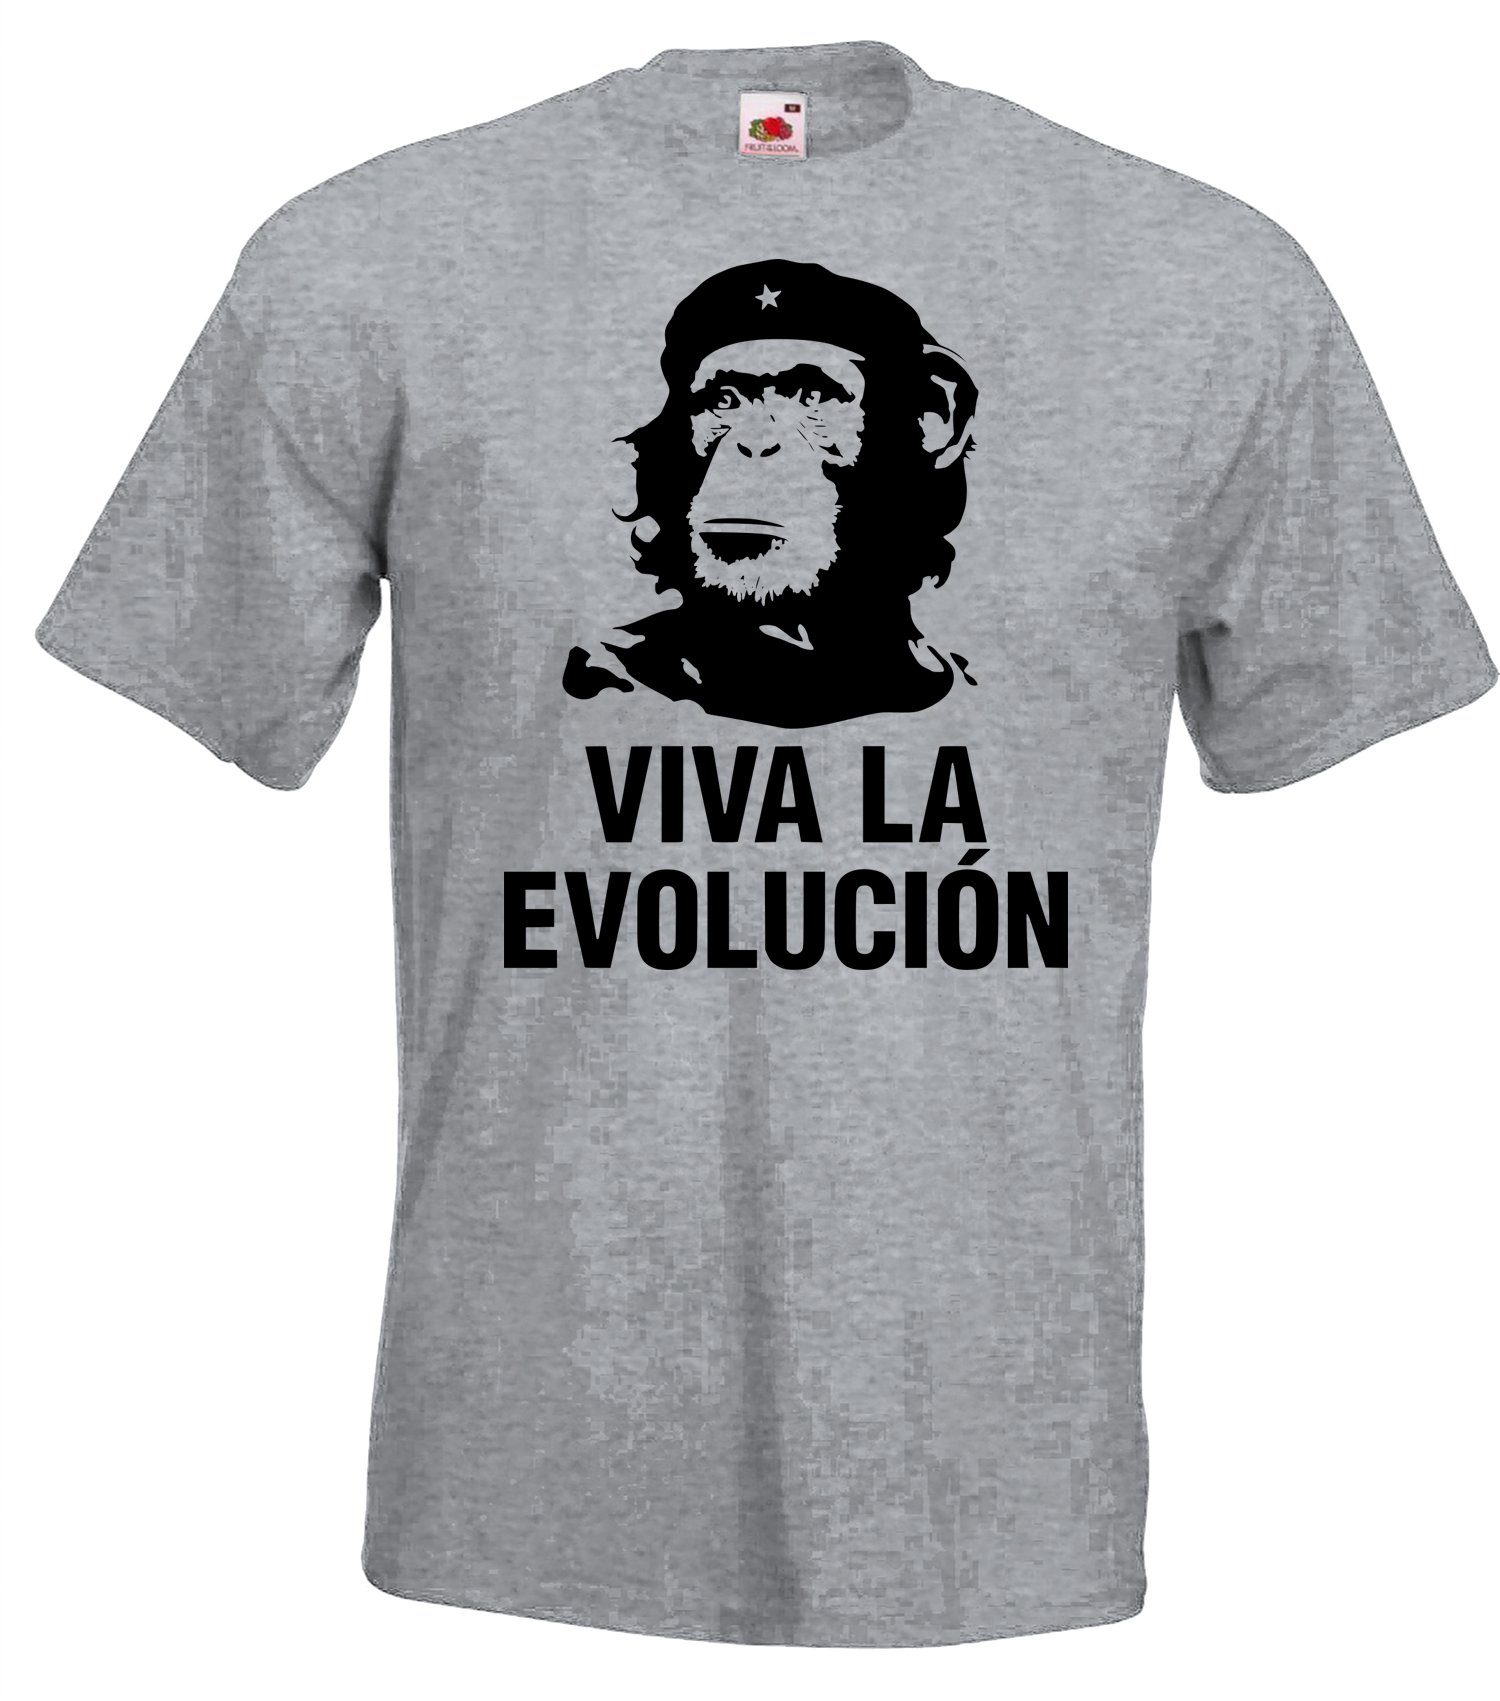 Youth Designz T-Shirt T-Shirt Grau Viva la trendigem Fun Frontdruck mit Herren Evolucion